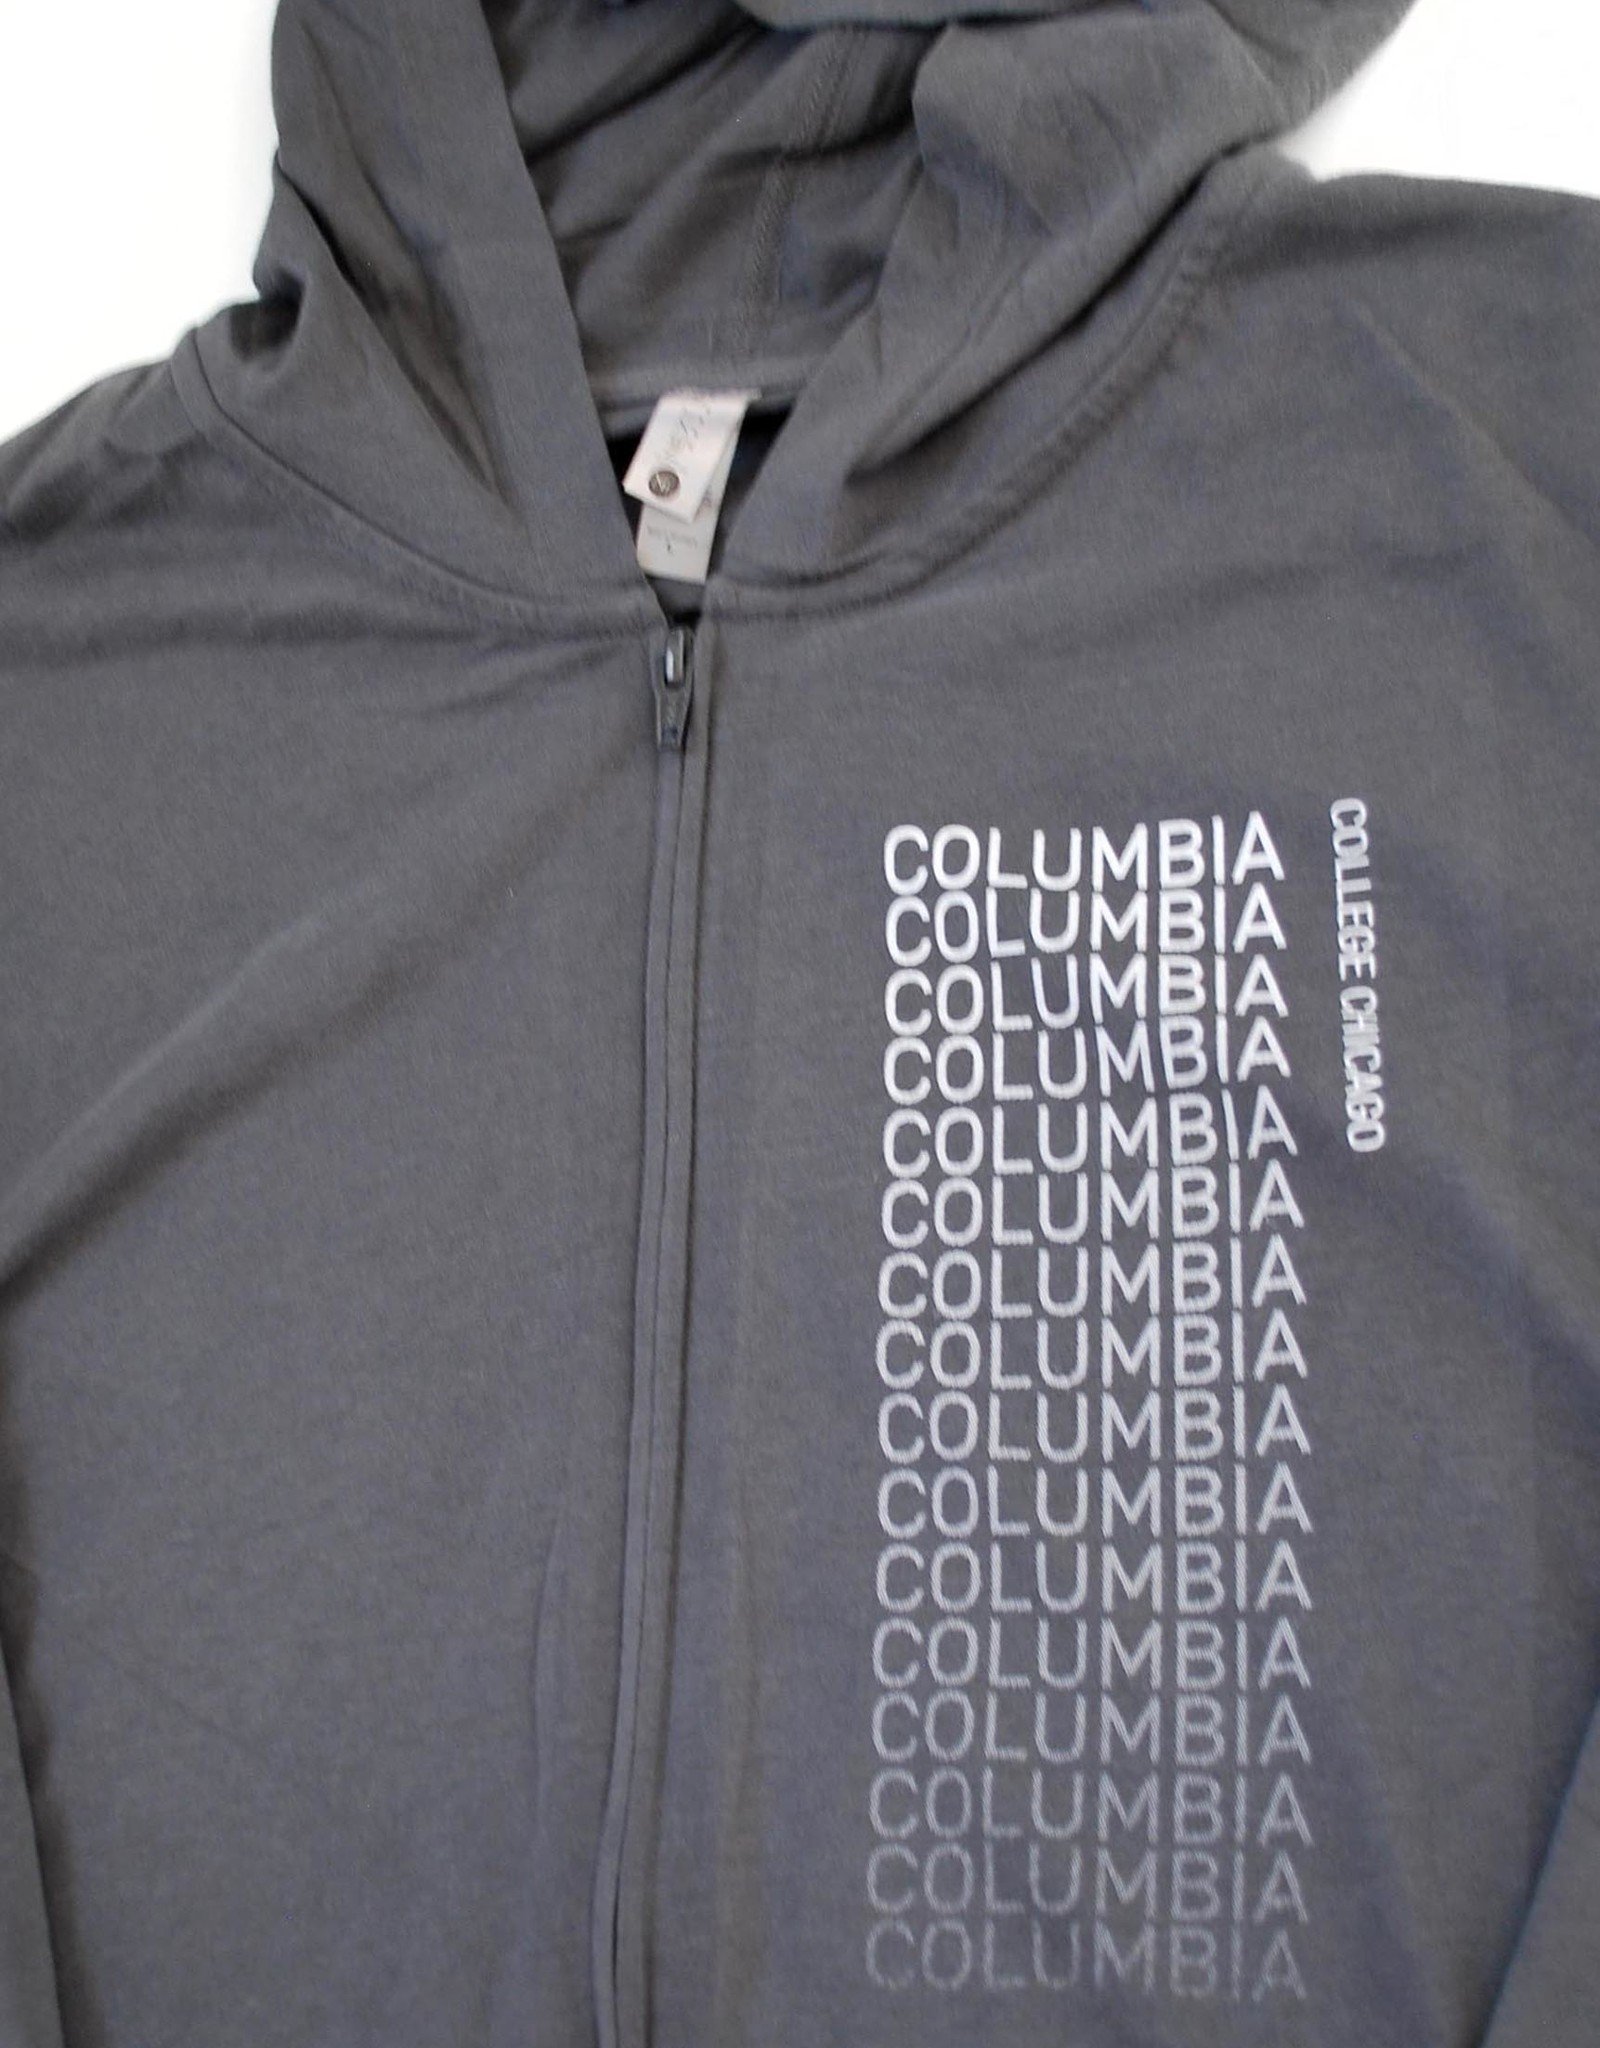 Buy Columbia, By Columbia Columbia Hooded Zip-up